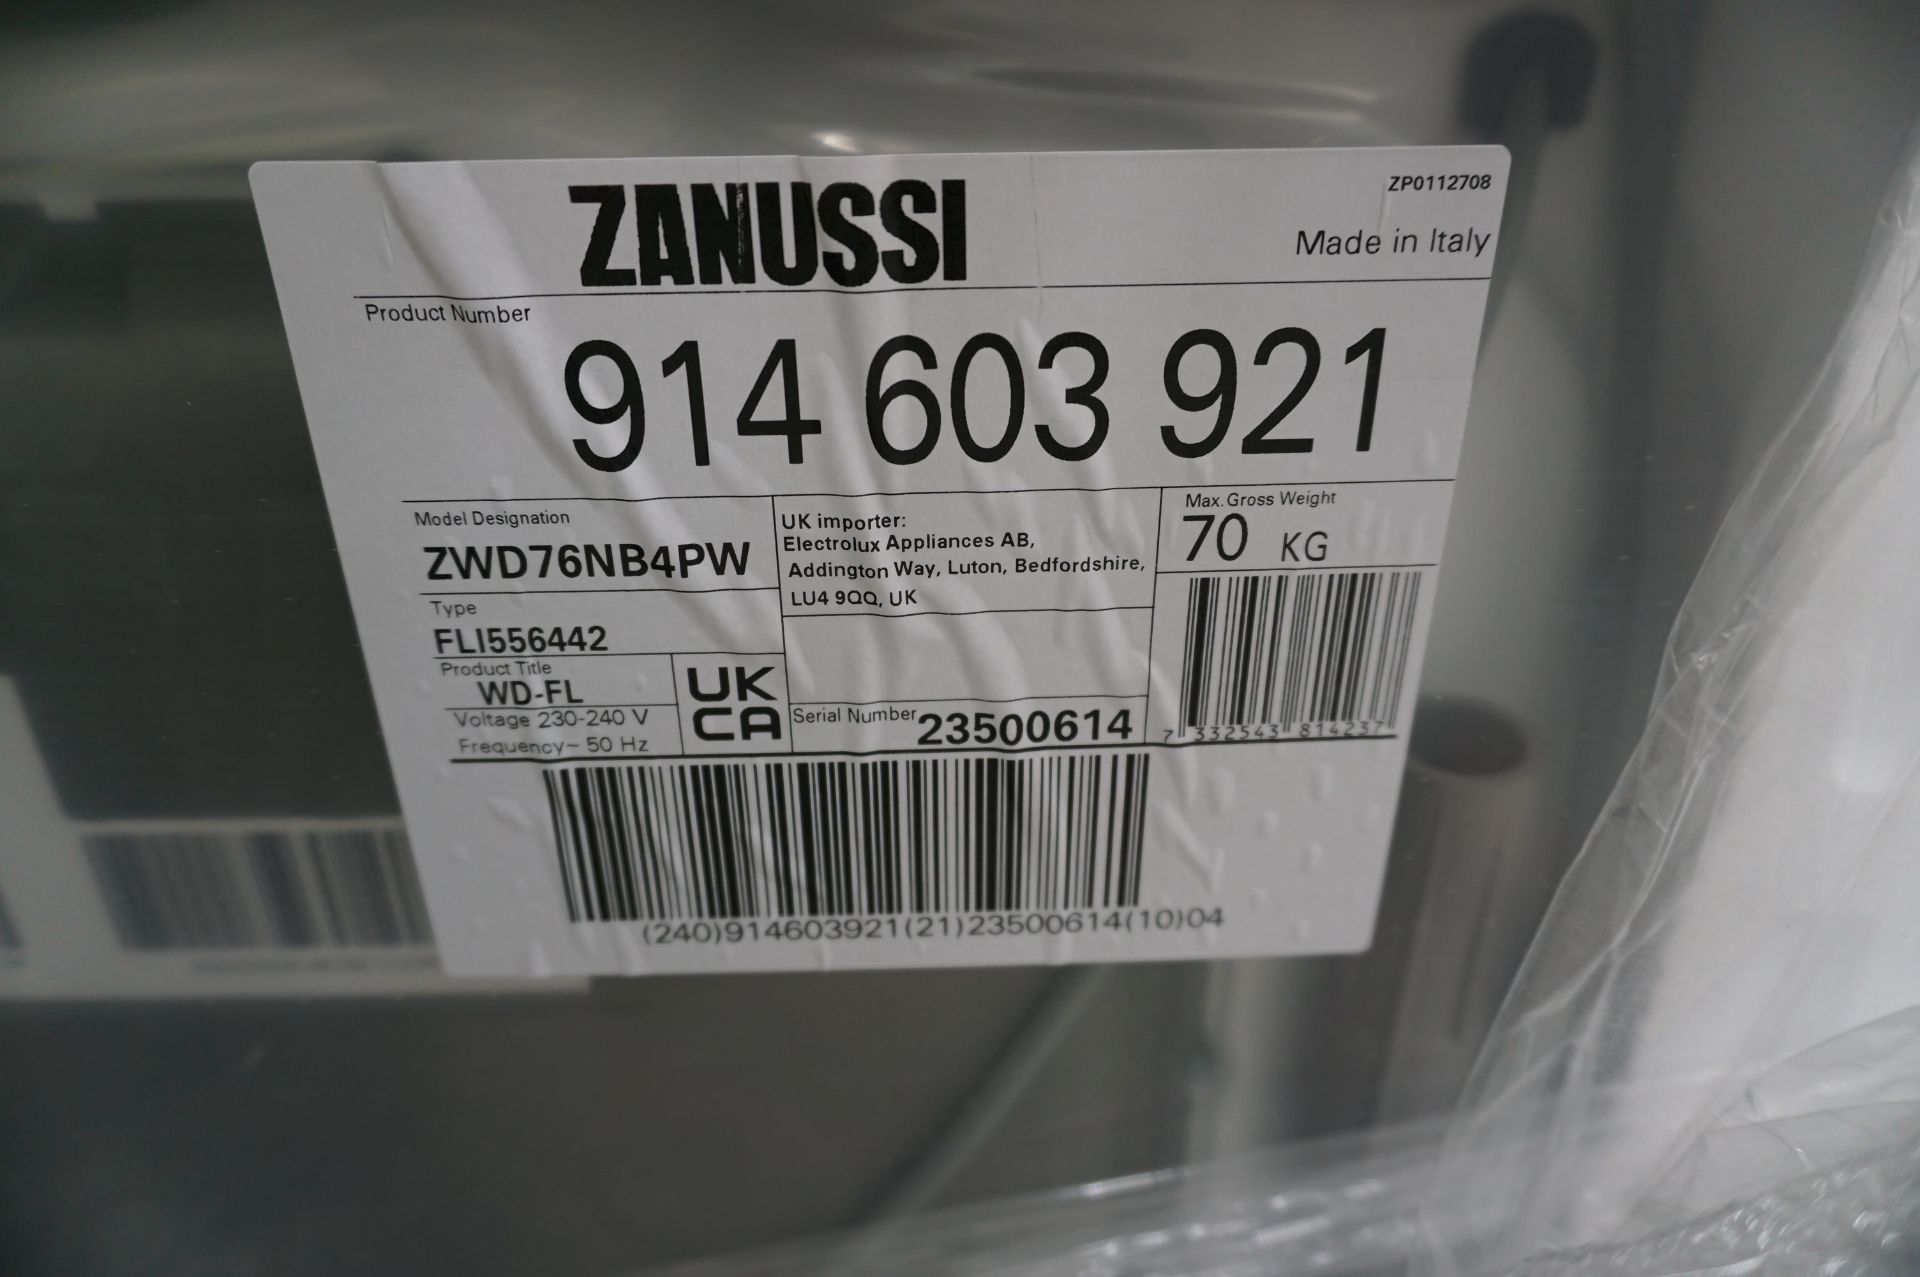 Kitchen white goods to include integrated Zanussi, ZNFN18FSF fridge/freezer, Zanussi, SWD76NB4PW - Image 8 of 10